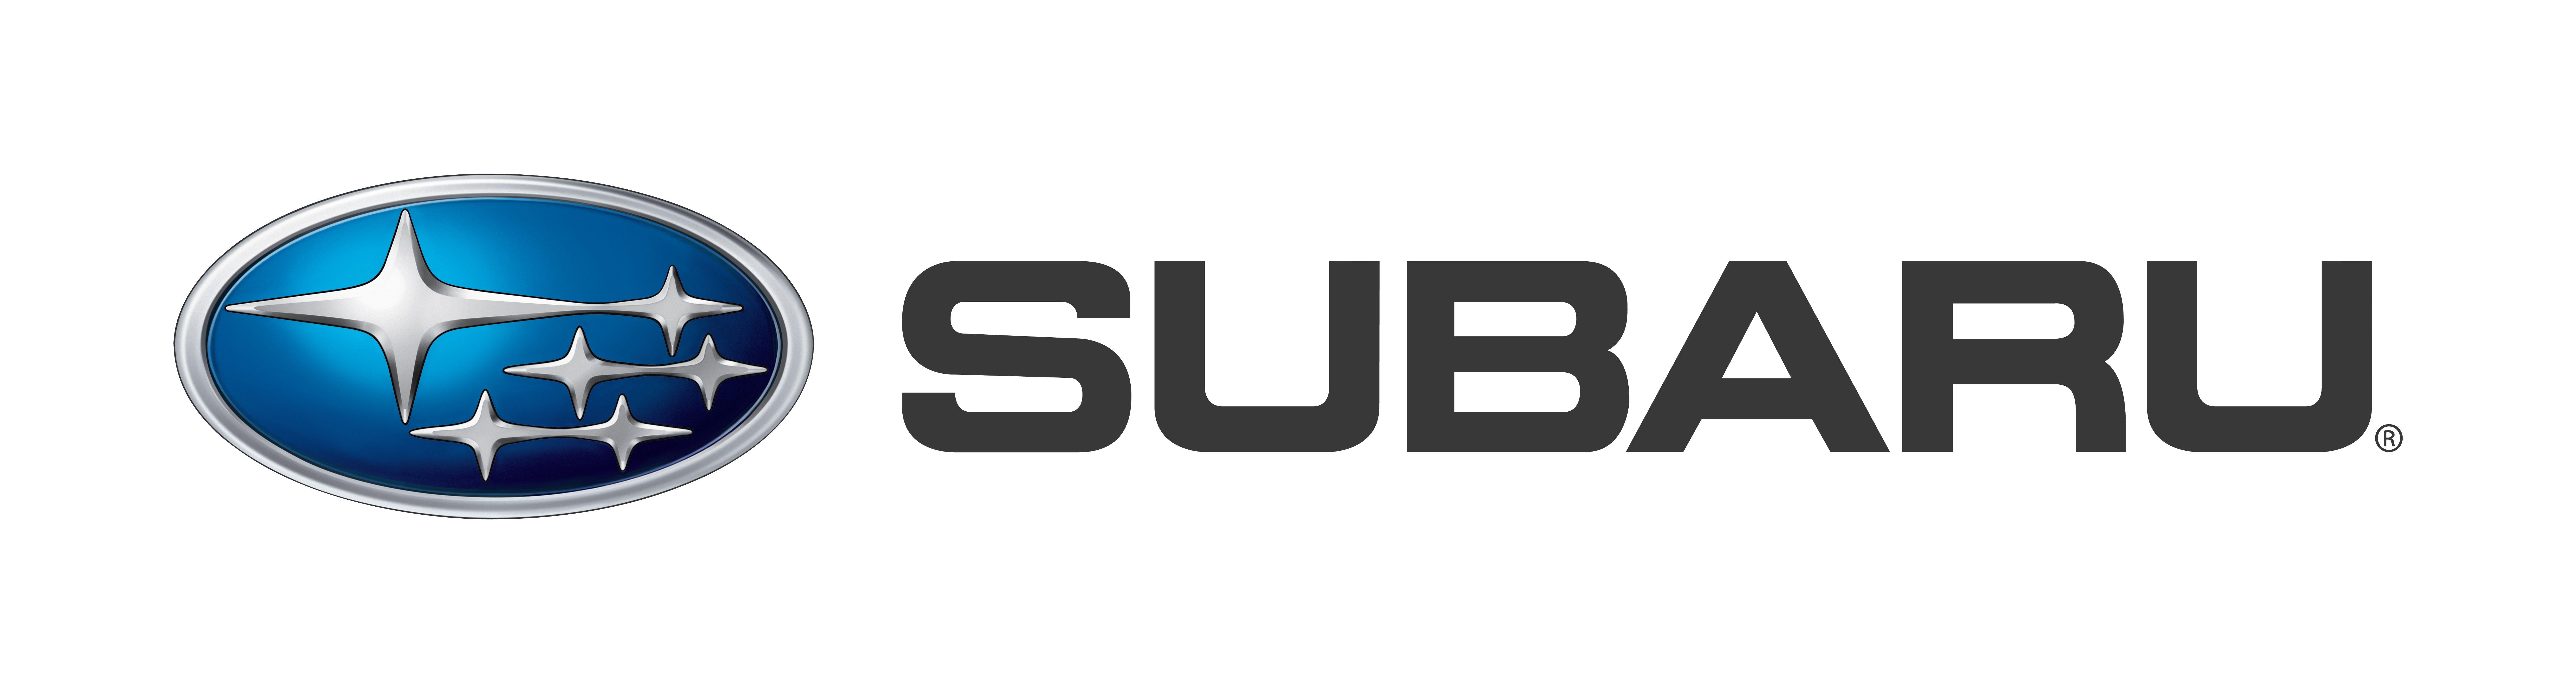 2018 Subaru Logo - Subaru - Forums - Gaming Asylum